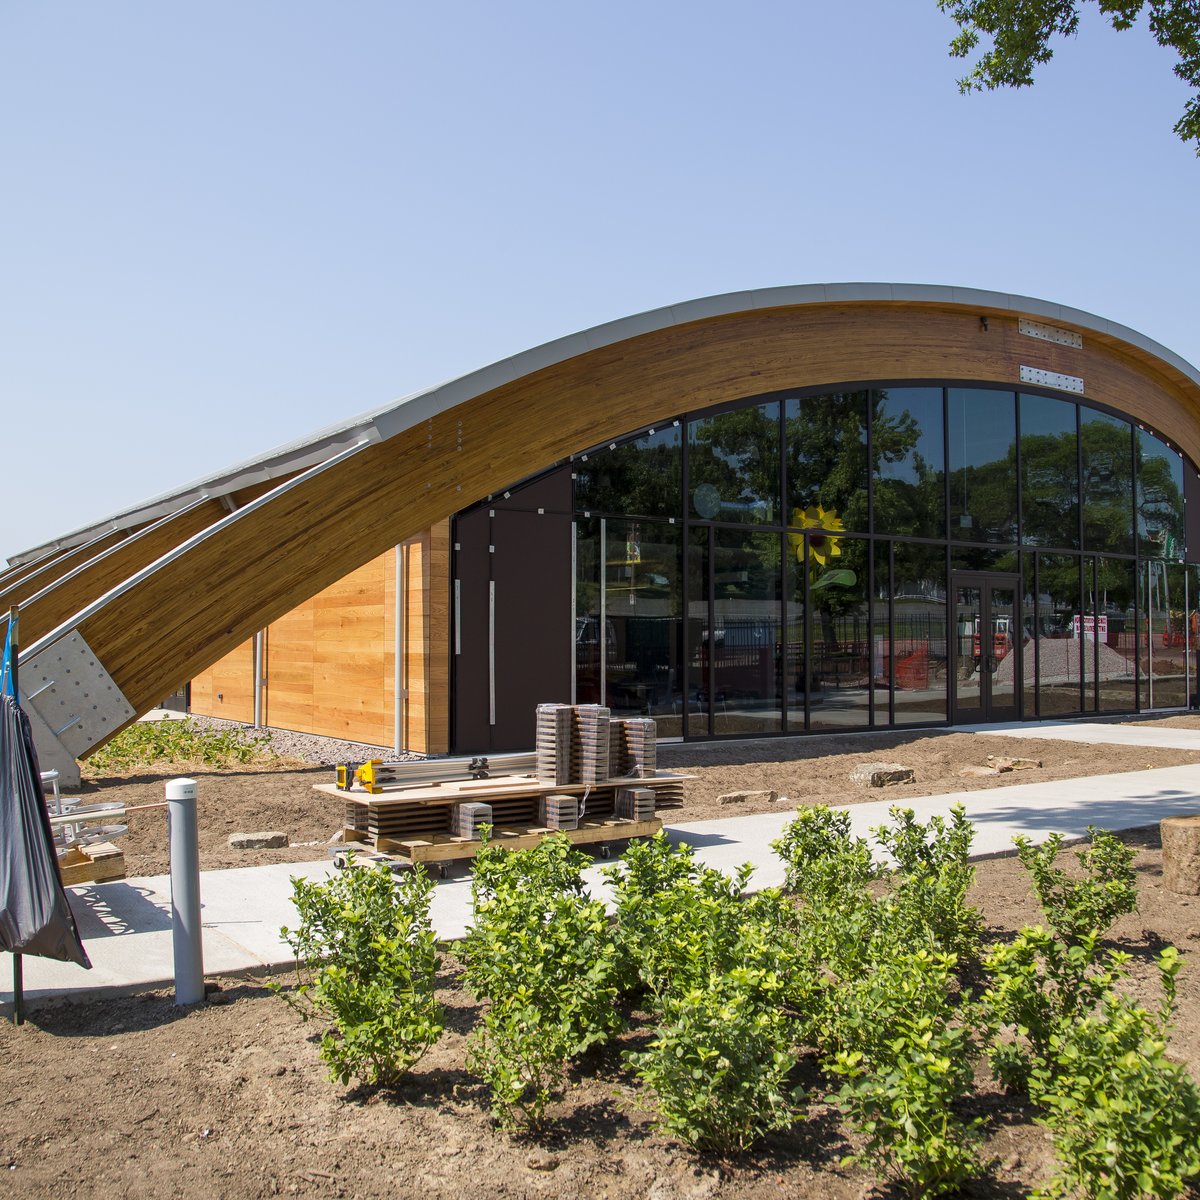 Greenhouse Update: Large Scale Hydroponics - Saint Louis Science Center